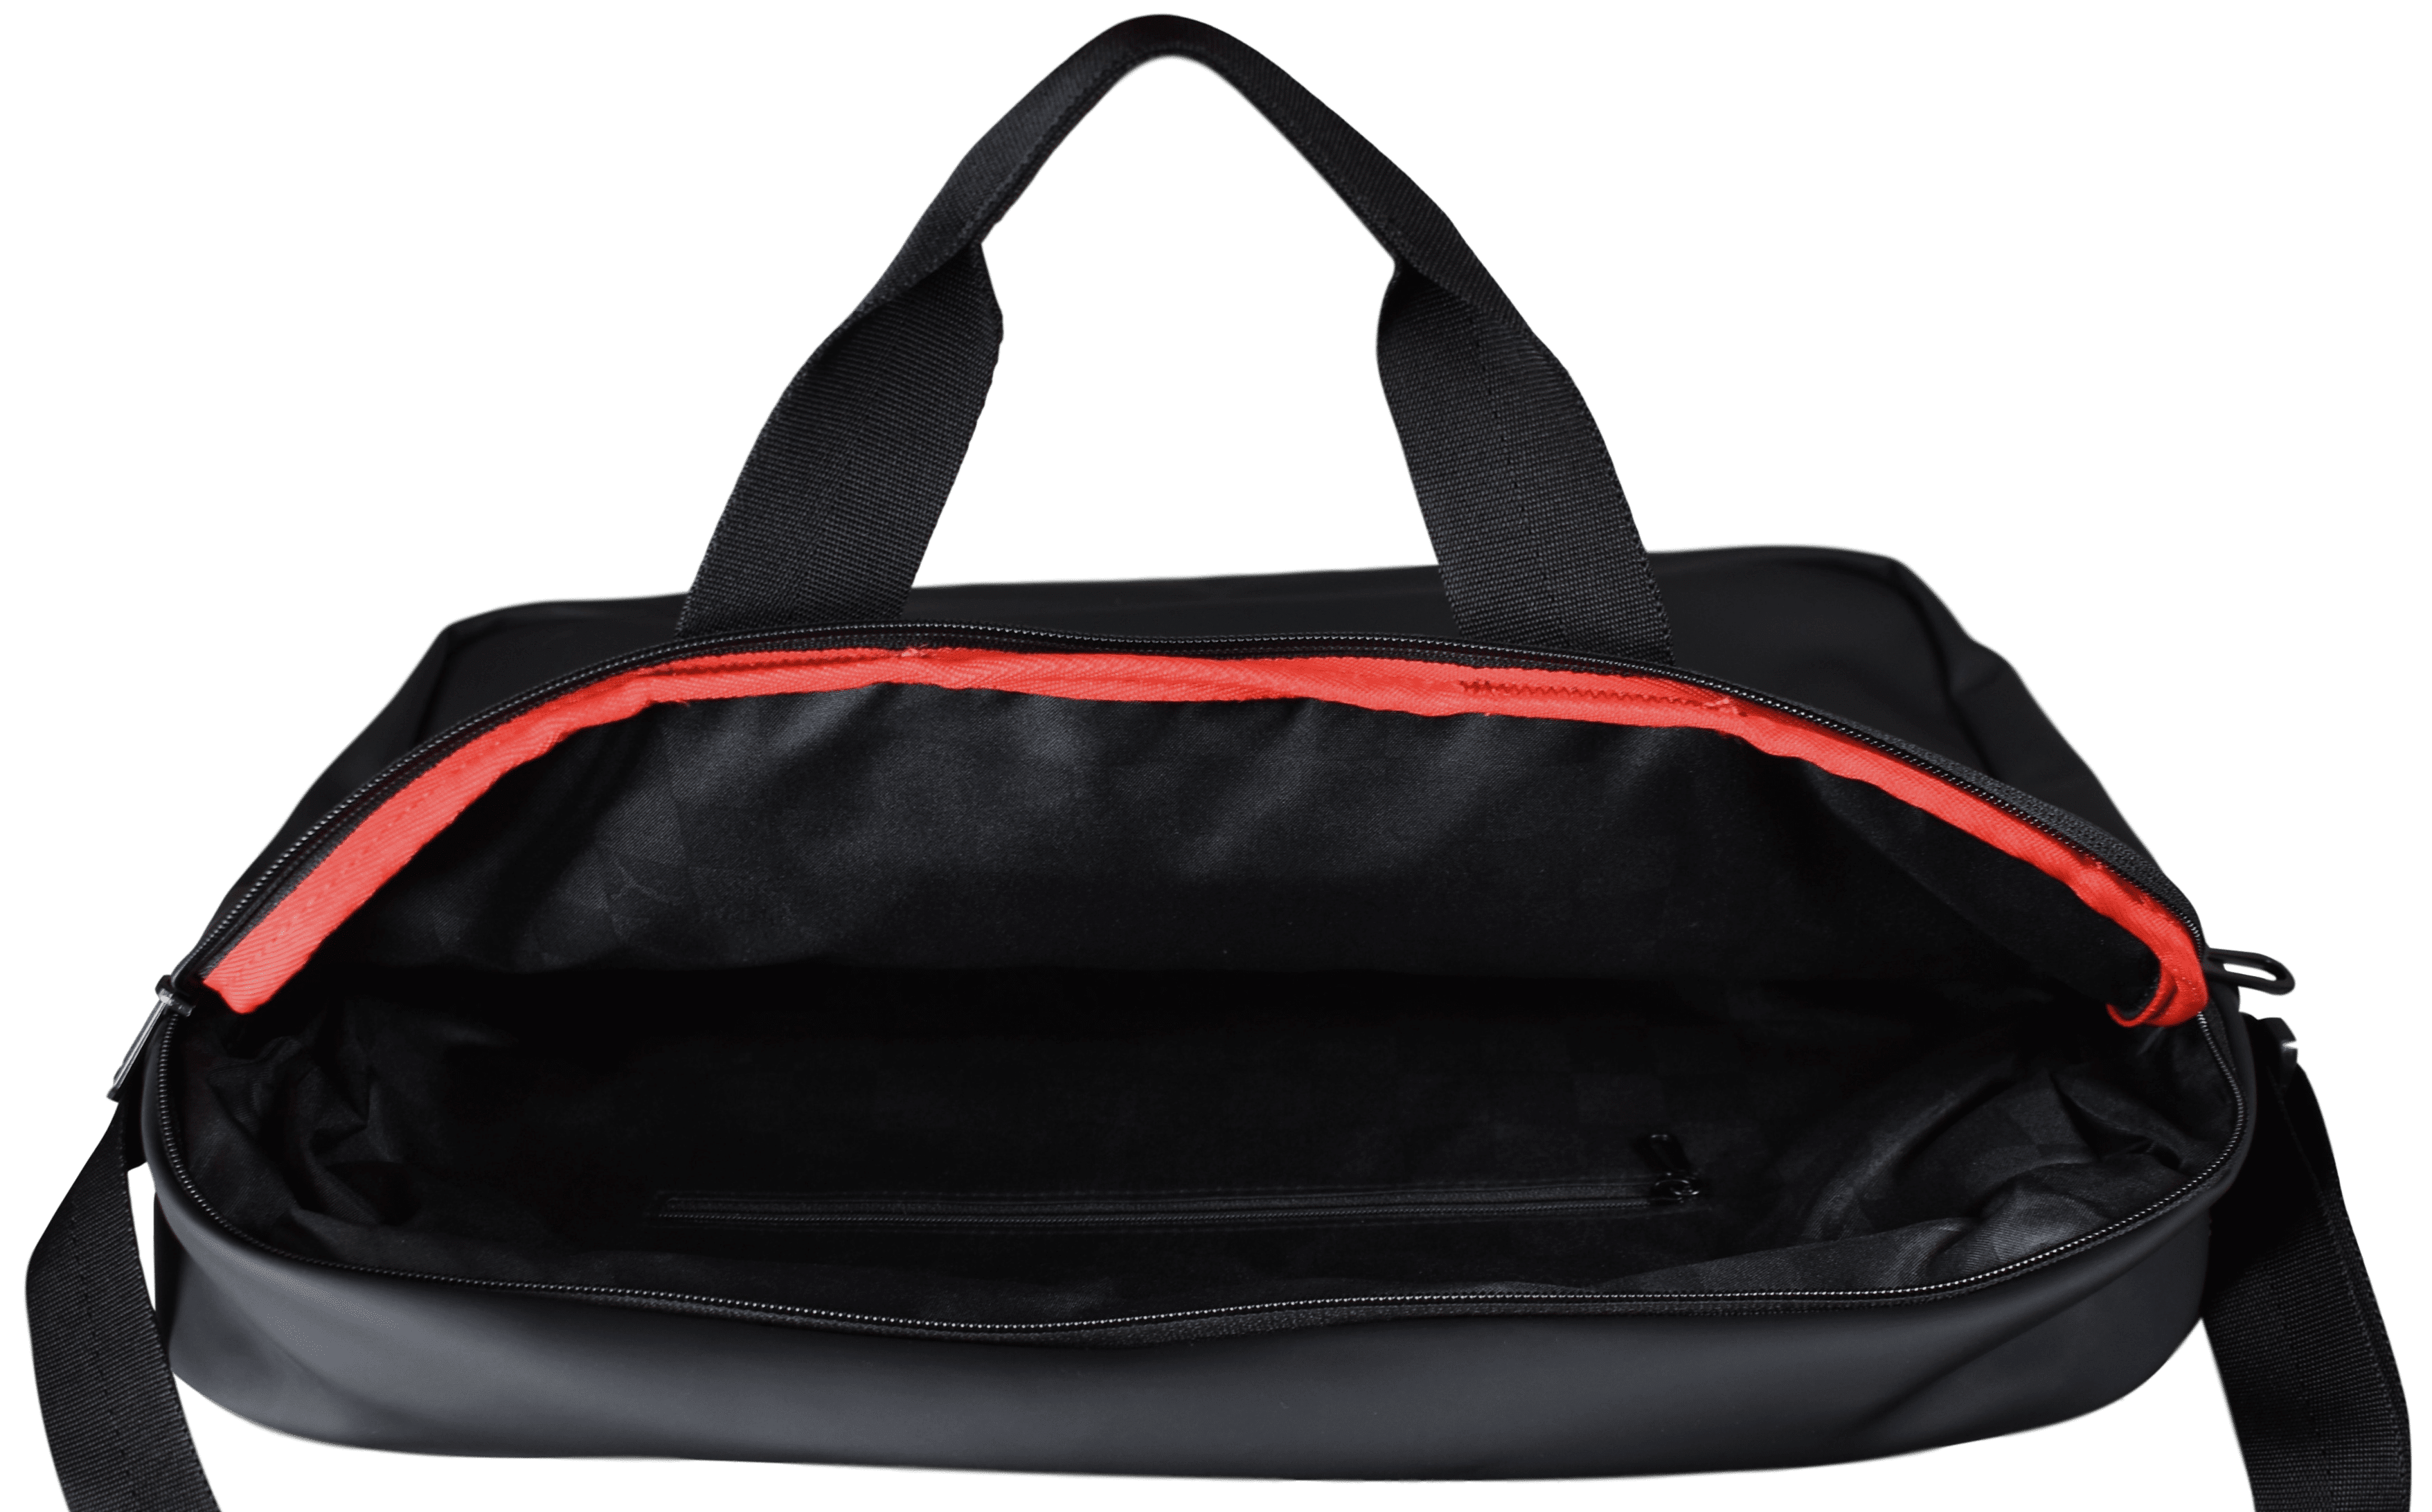 Buy Puma Ferrari LS Women's Handbag (Puma White) at Amazon.in